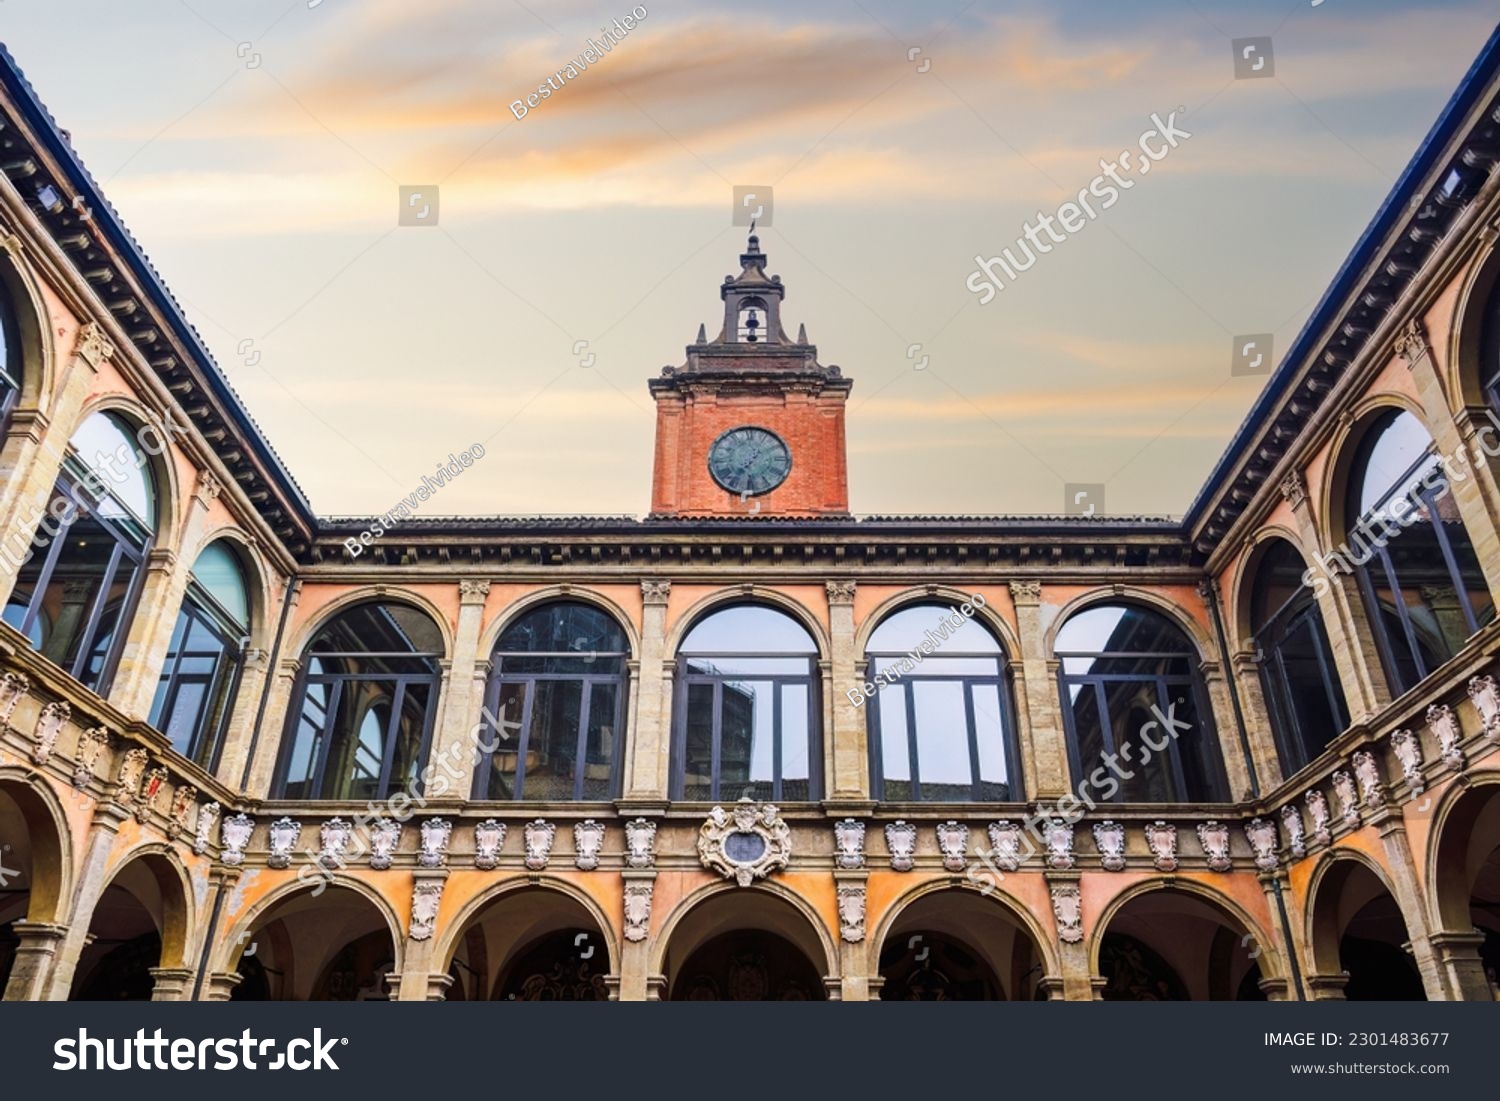 Bologna, Italy Biblioteca Comunale dell'Archiginnasio courtyard with clock tower against sky. #2301483677